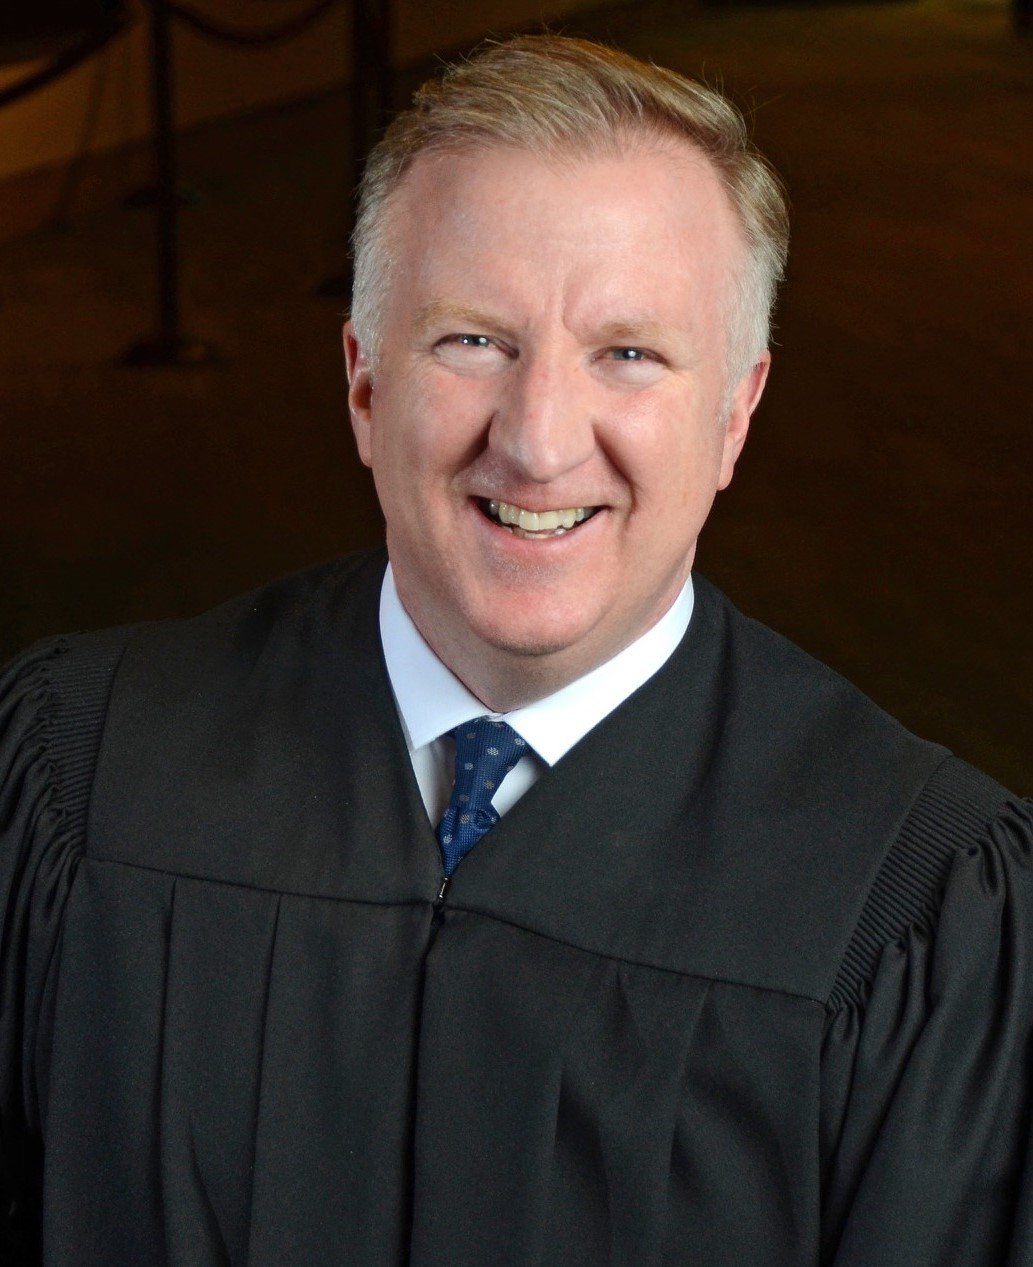 Judge Chris Kennedy